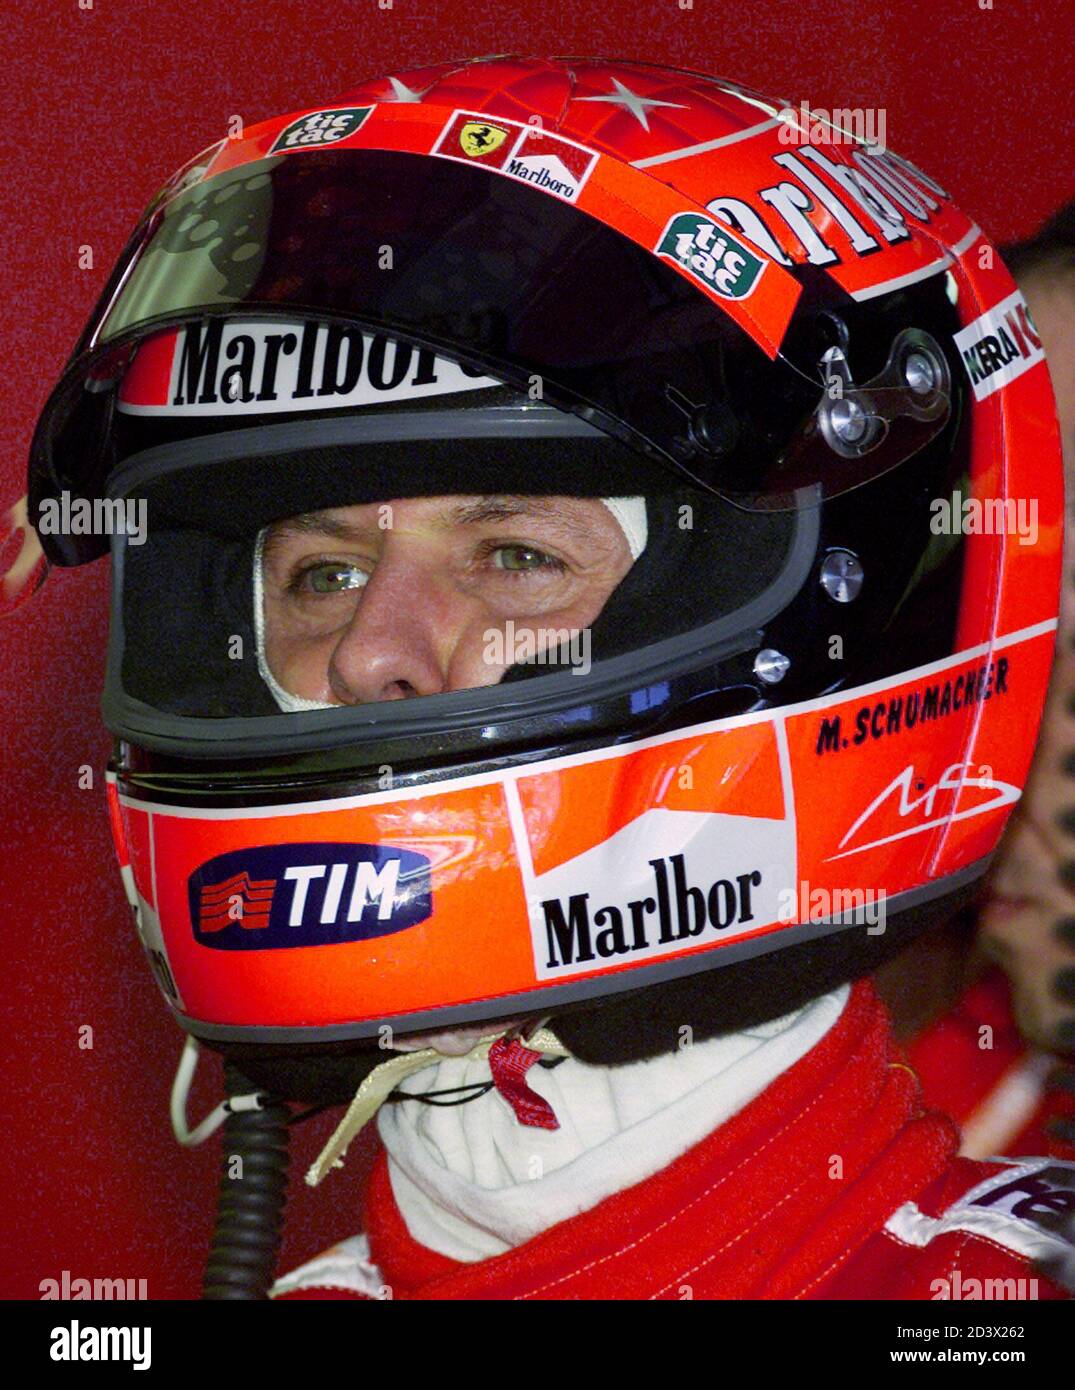 FORMULA ONE DEFENDING WORLD CHAMP MICHAEL SCHUMACHER WEARS A SCHUBERTH  HELME HELMET AT THE AUSTRALIAN GRAND PRIX IN MELBOURNE. Ferrari's defending  world champion Michael Schumacher of German wears a Schuberth Helme helmet